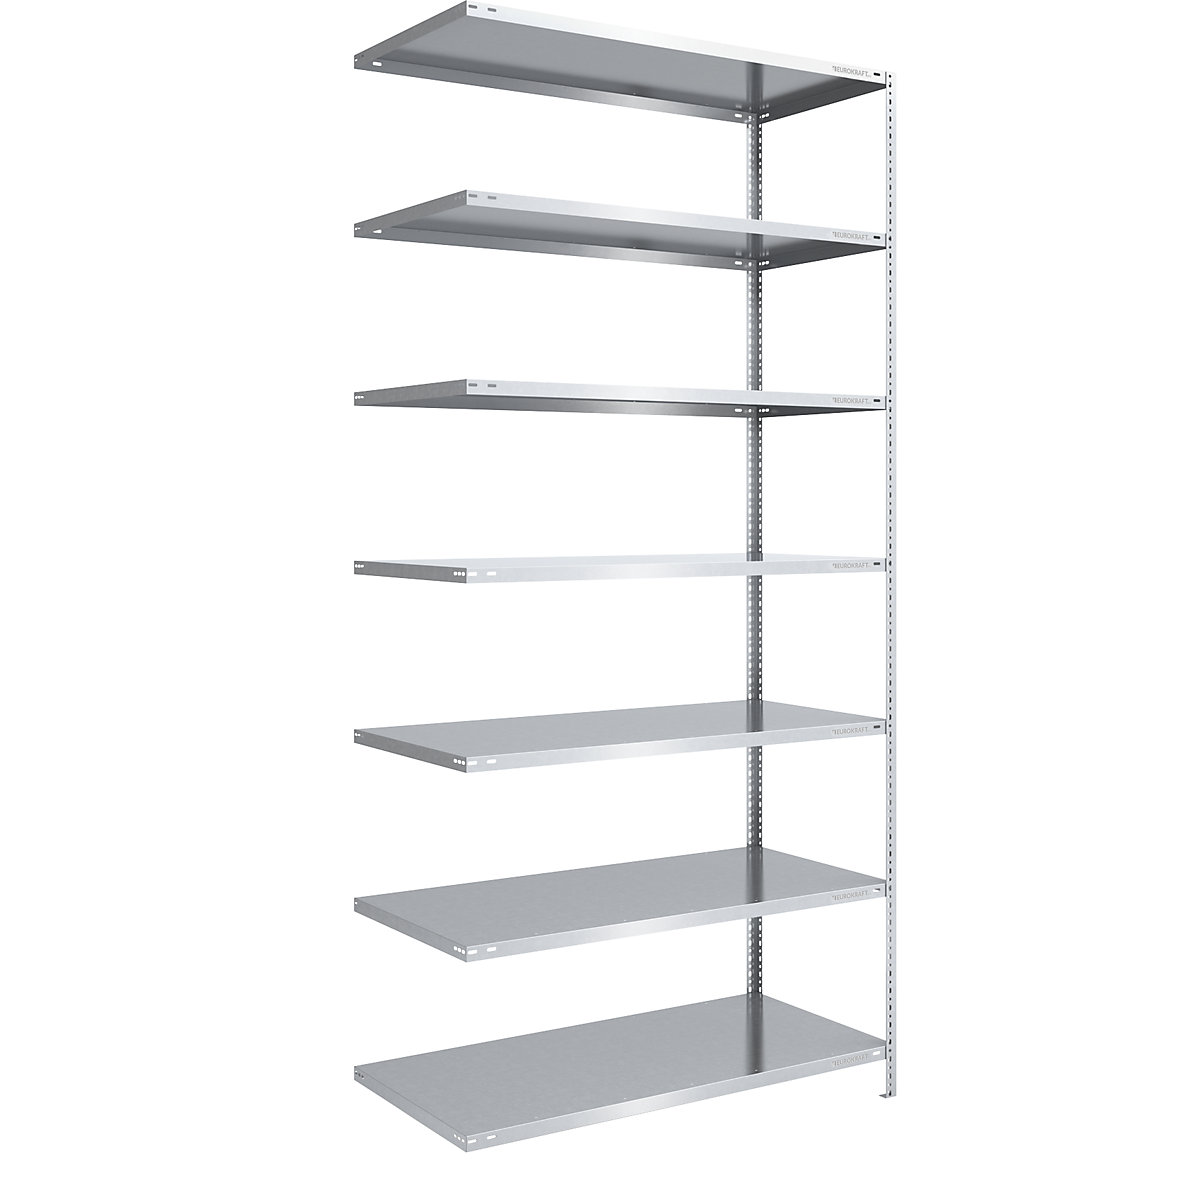 Bolt-together storage shelving, zinc plated, medium duty – eurokraft pro, shelf unit height 3000 mm, shelf width 1300 mm, depth 800 mm, extension shelf unit-12